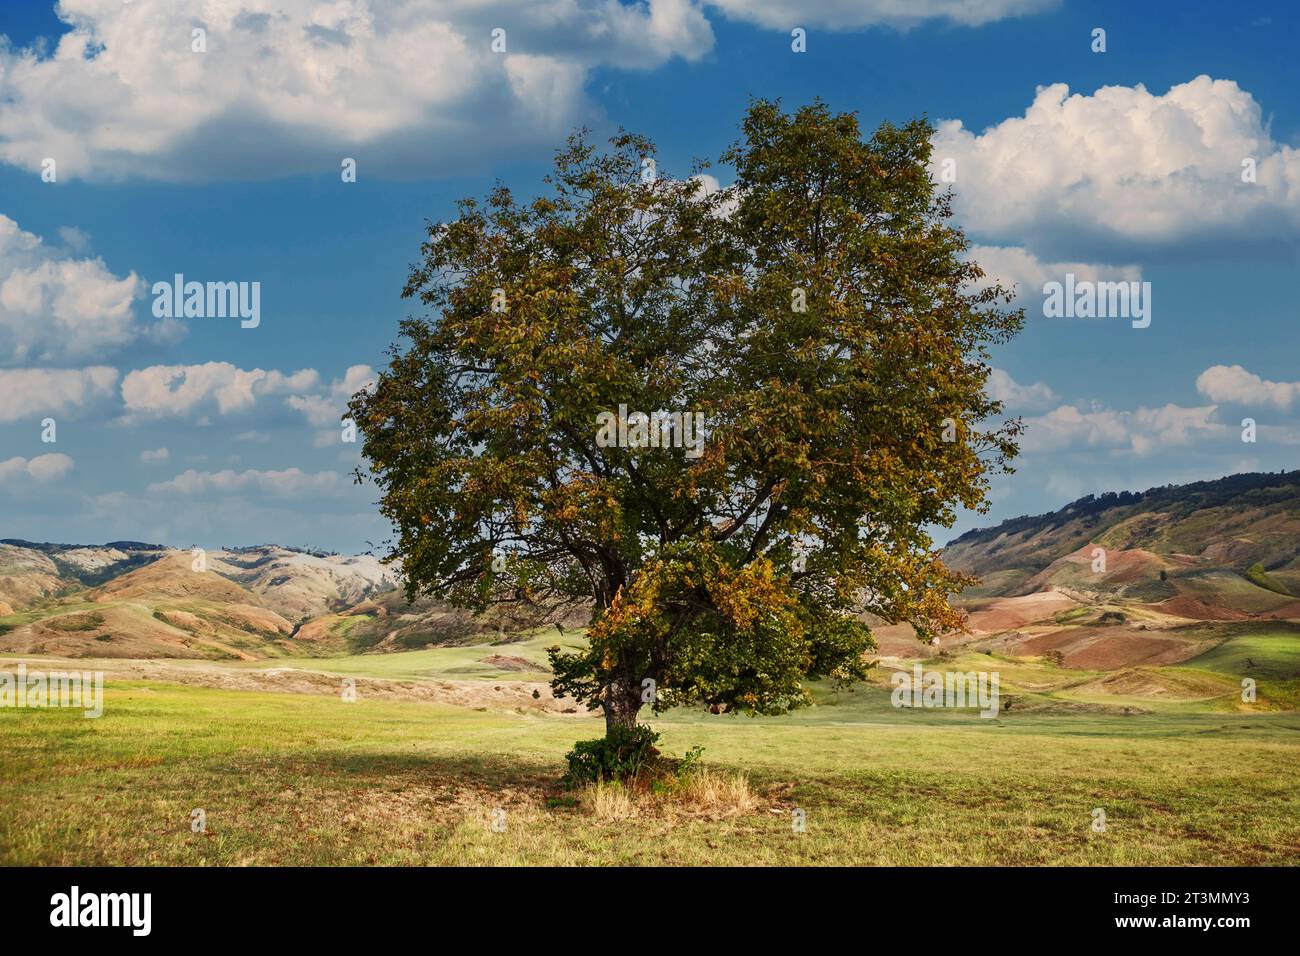 tree in desert oasis Stock Photo